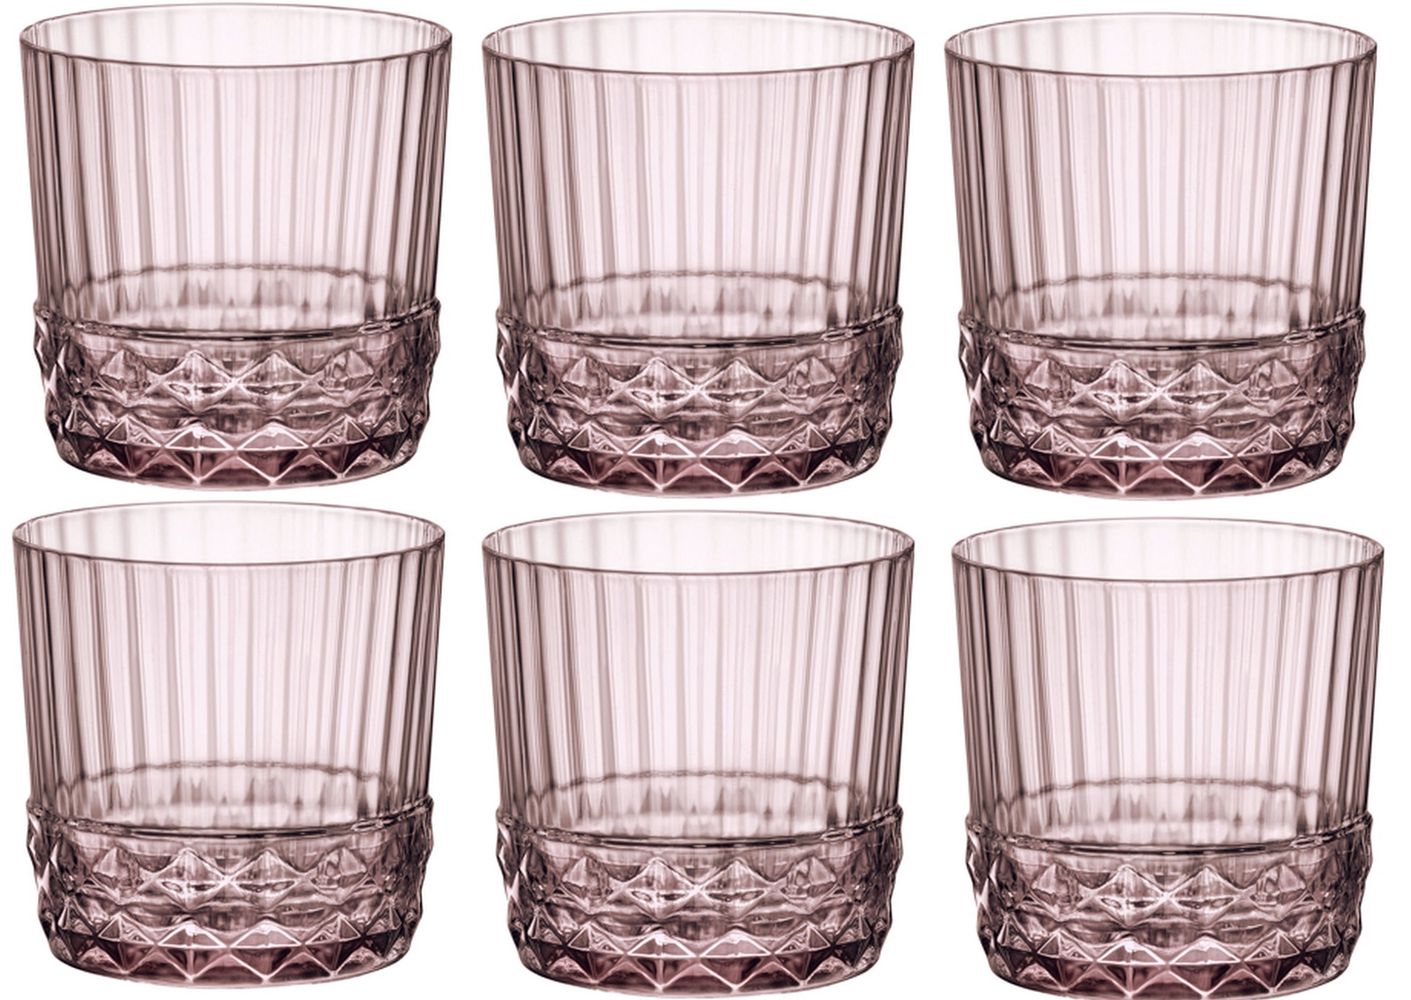 Set di 2 bicchieri da acqua rosa e rossi